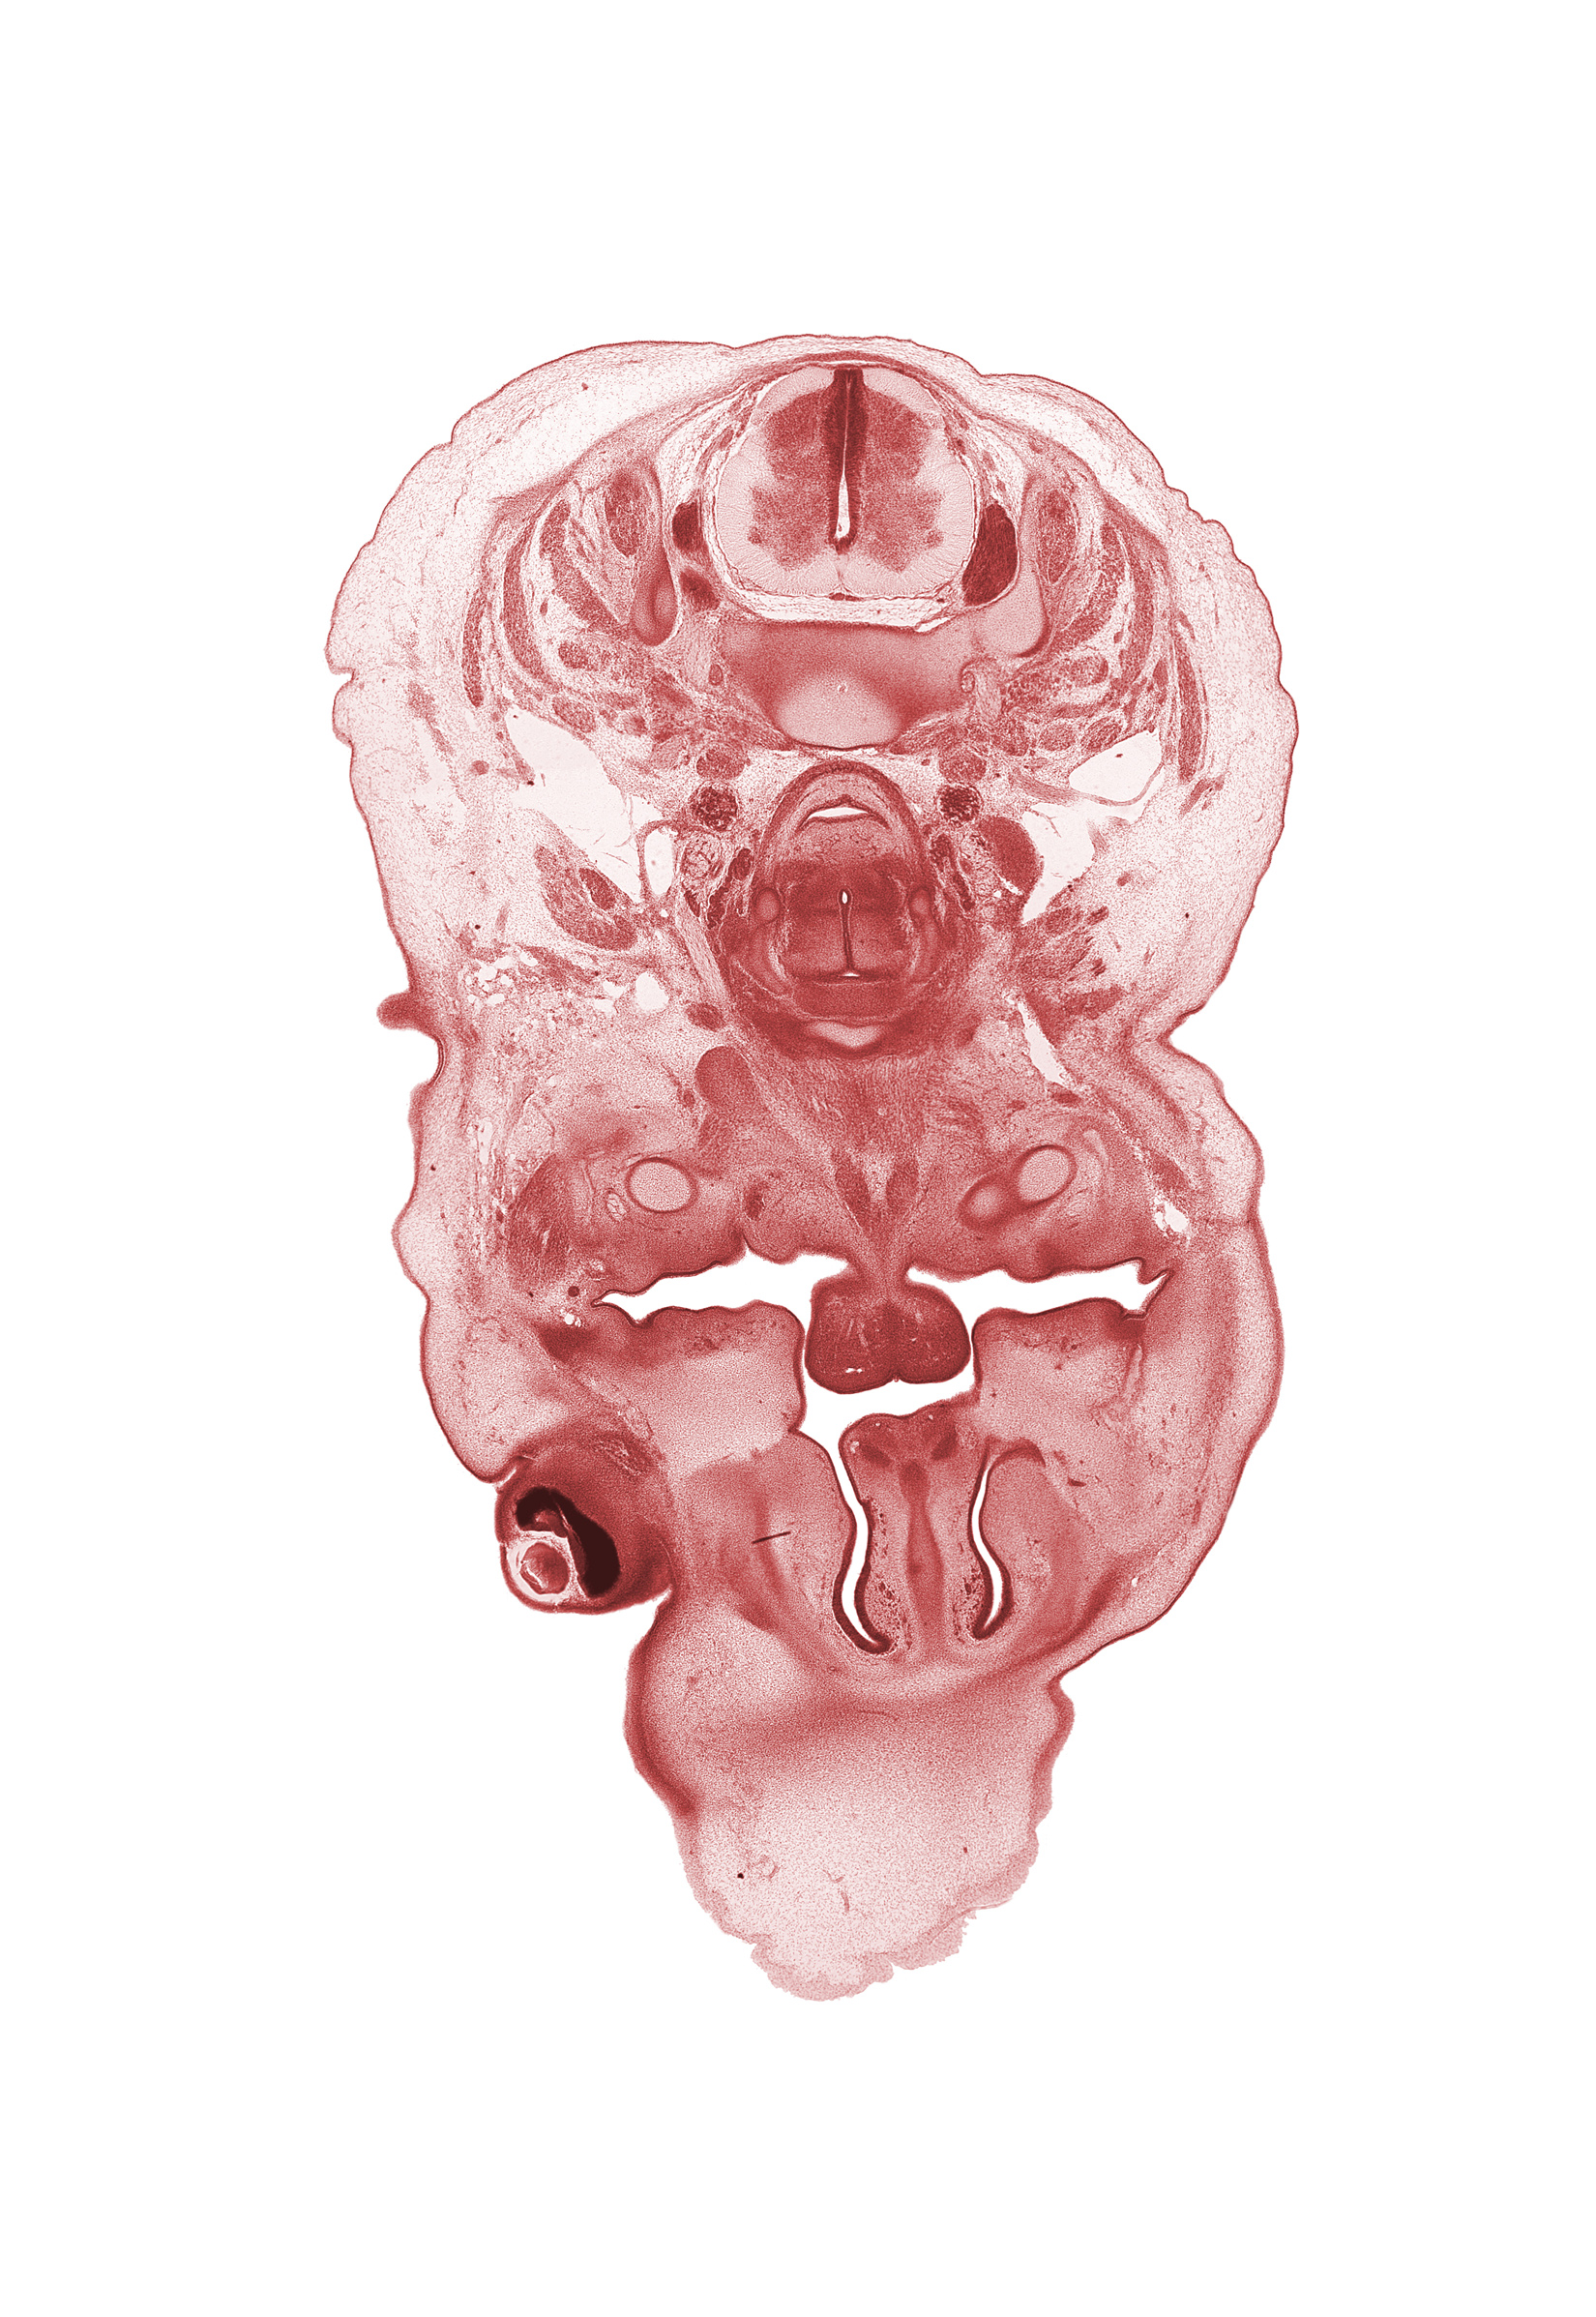 C-5 spinal ganglion, blastema of facial muscle, body of tongue, caudal edge of auricle, central canal, choana, frontal prominence, inferior ganglion of vagus nerve (CN X), internal carotid artery, internal jugular vein, interorbital groove, interorbital ligament, jugular lymph sac, laryngeal condensation, middle cervical sympathetic ganglion, neural arch of C-4 vertebra, palatine shelf, platysma muscle, retropharyngeal space, surface ectoderm